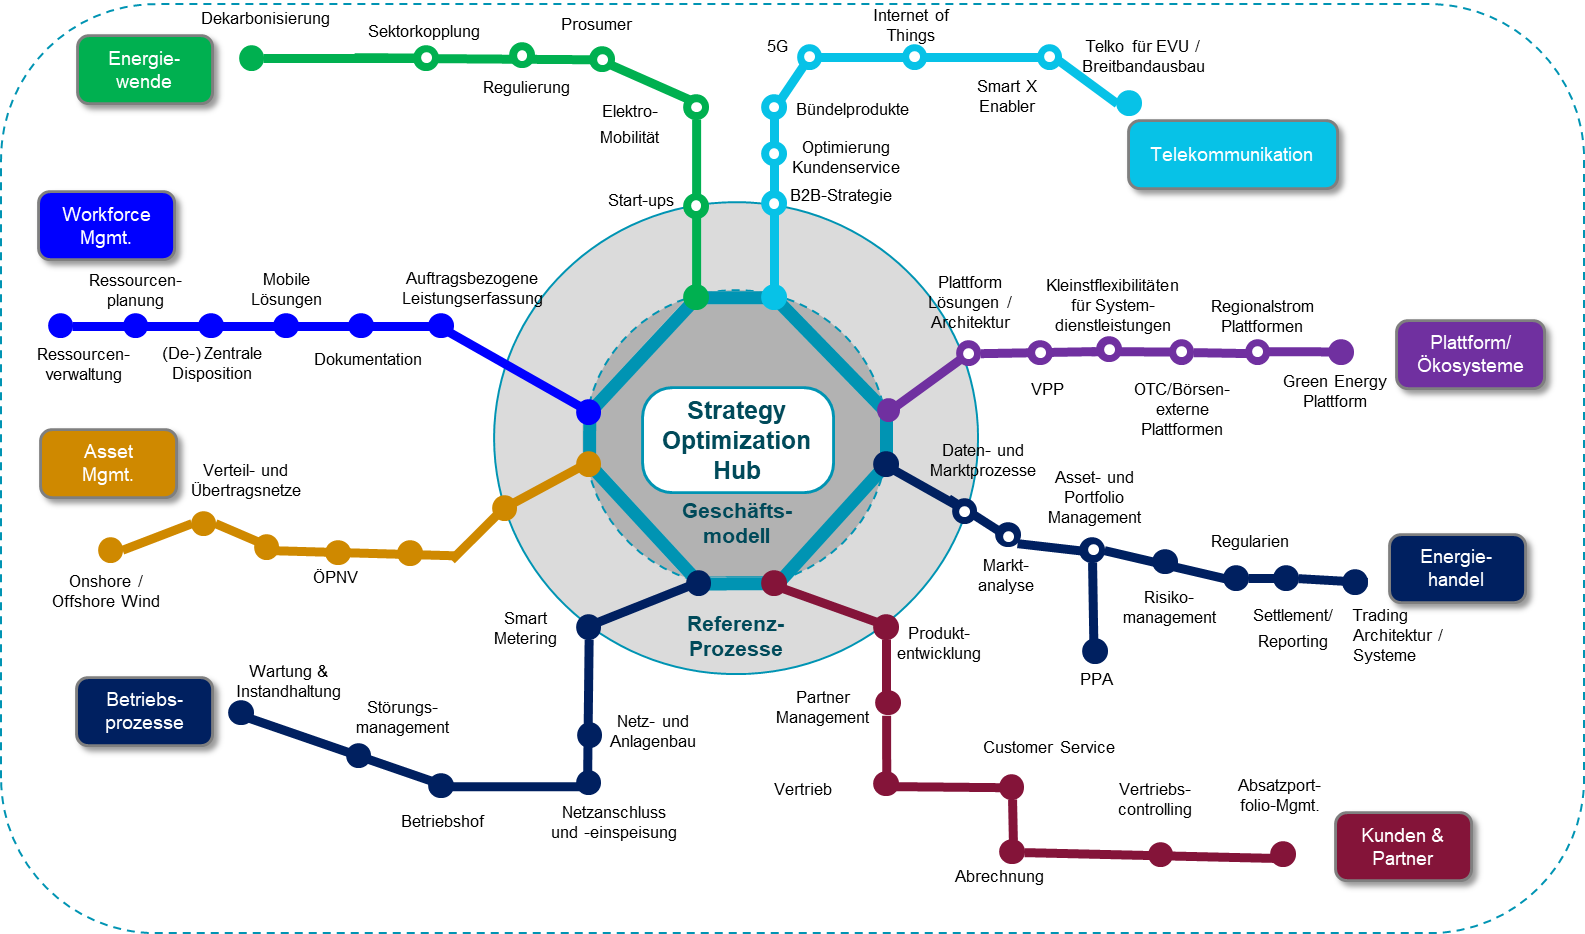 m3 framework Strategy Optimization Hub